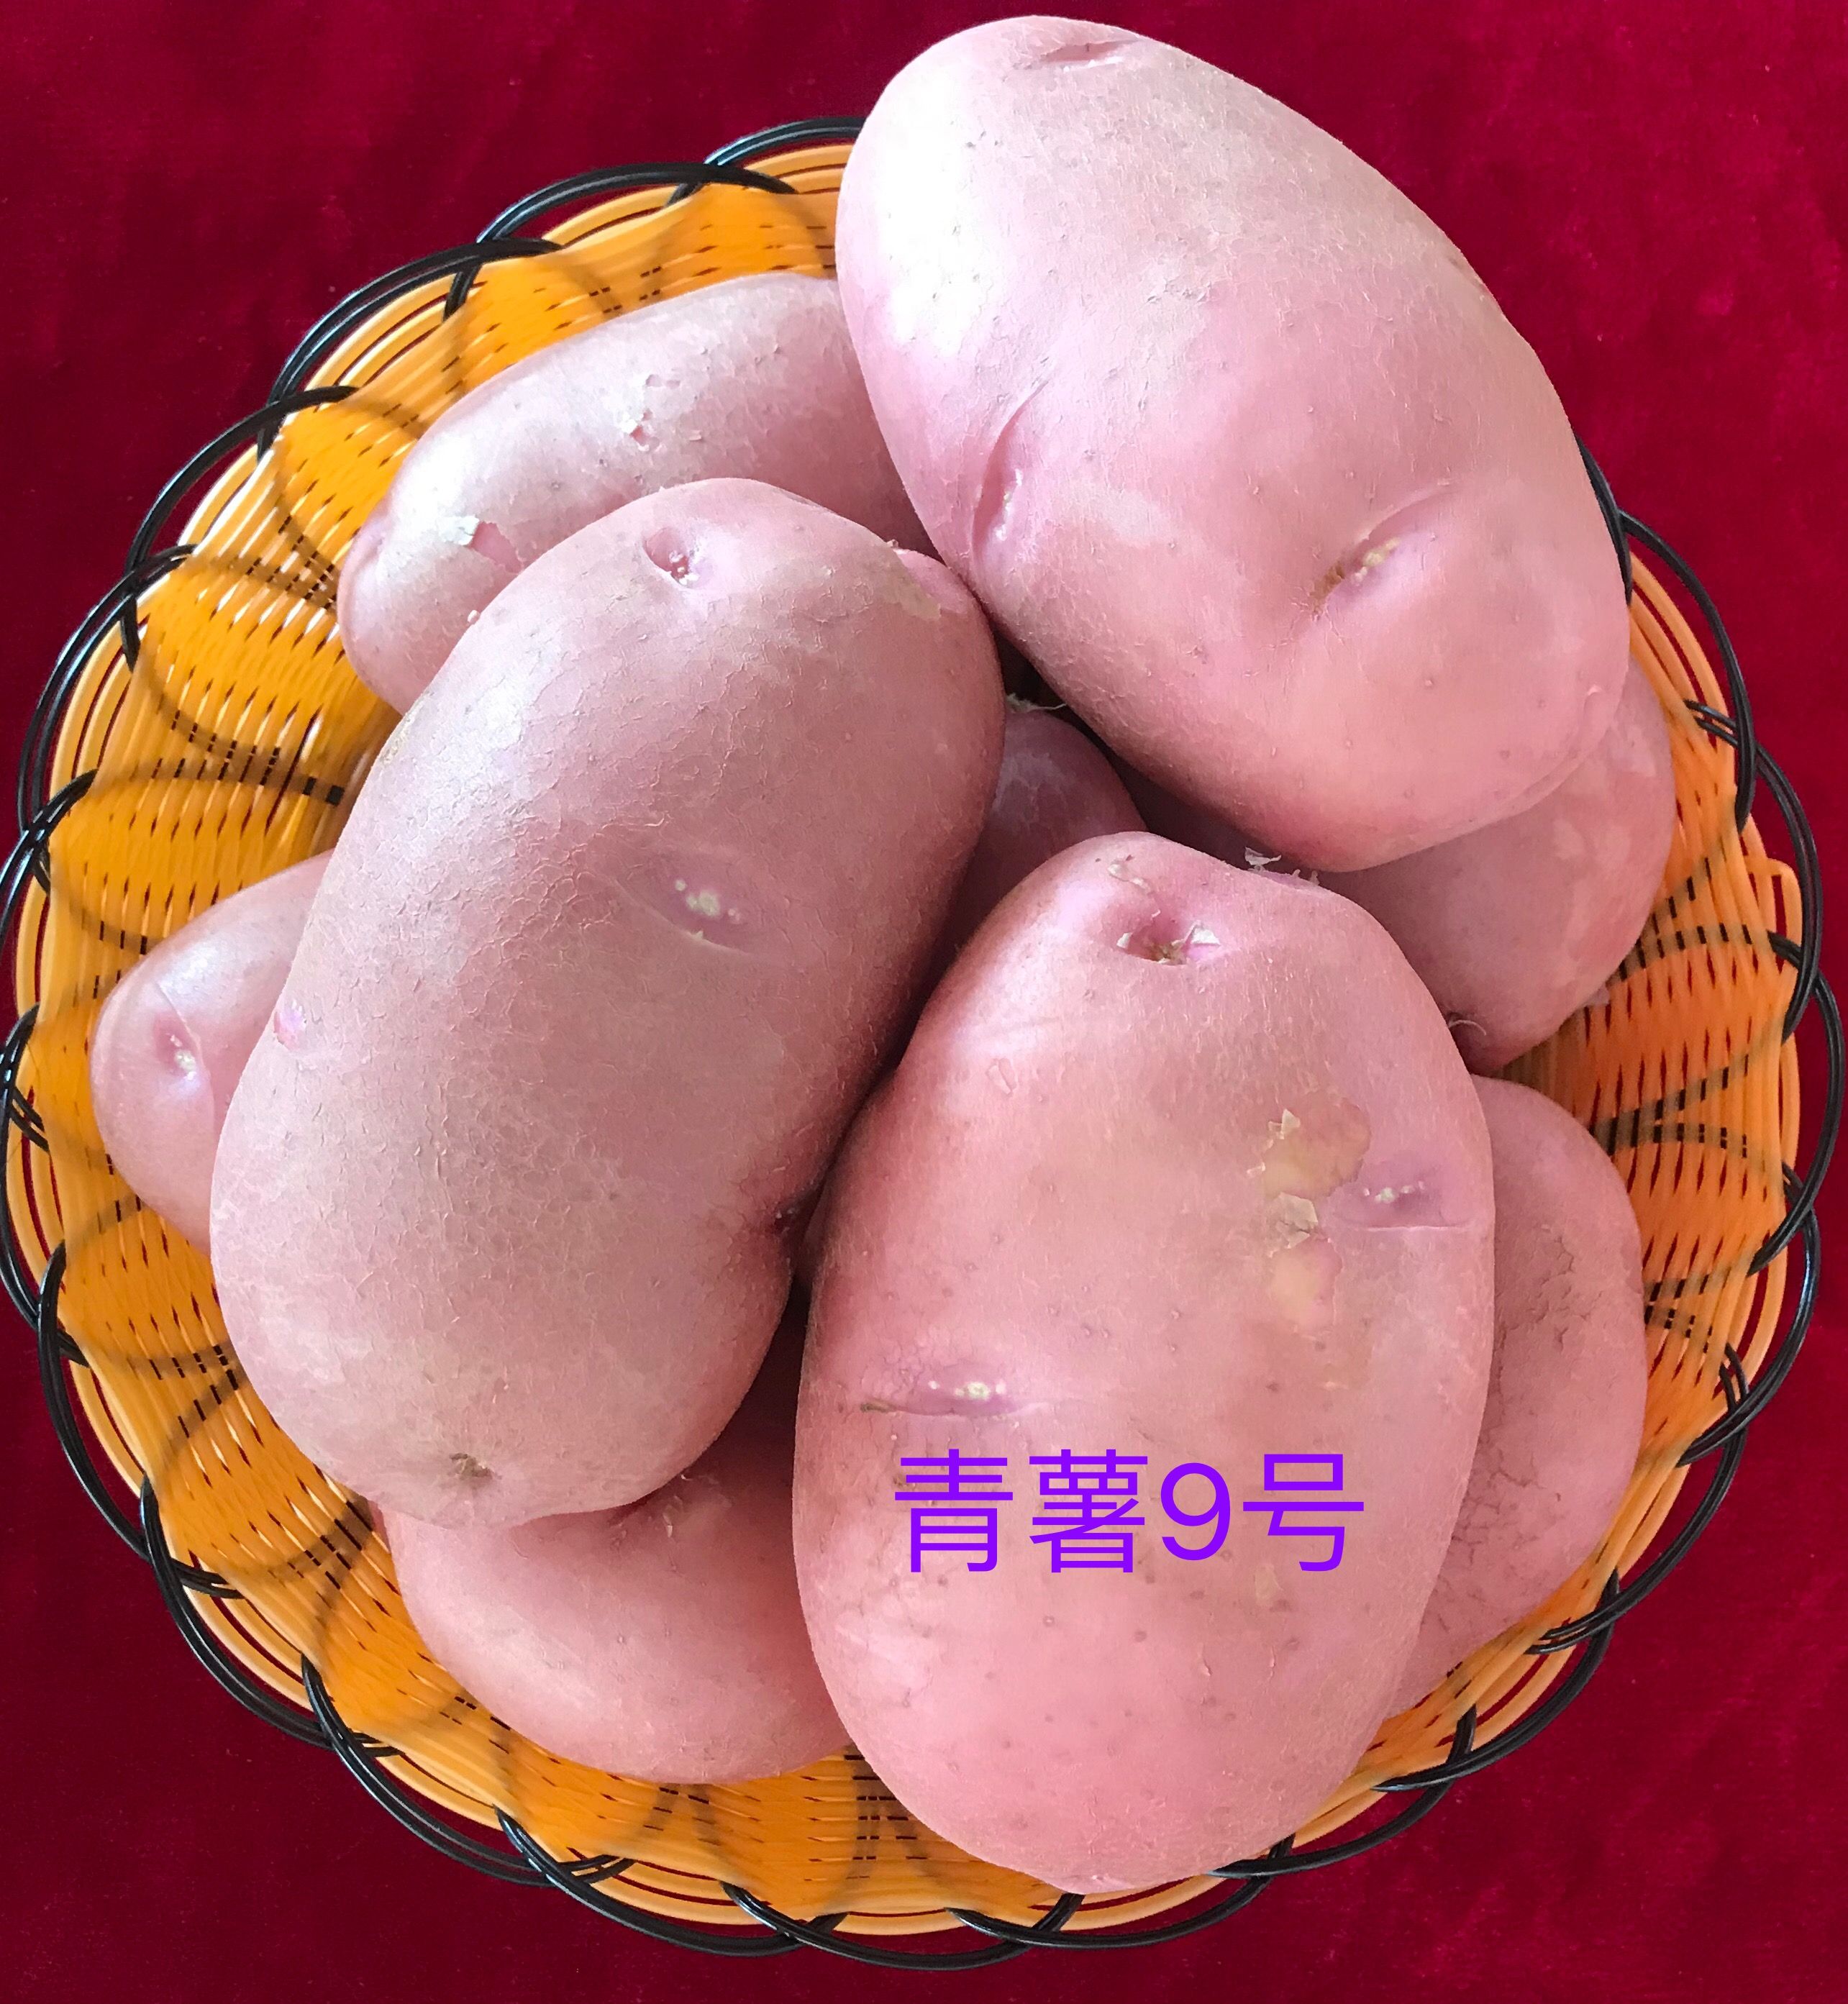 昆明土豆